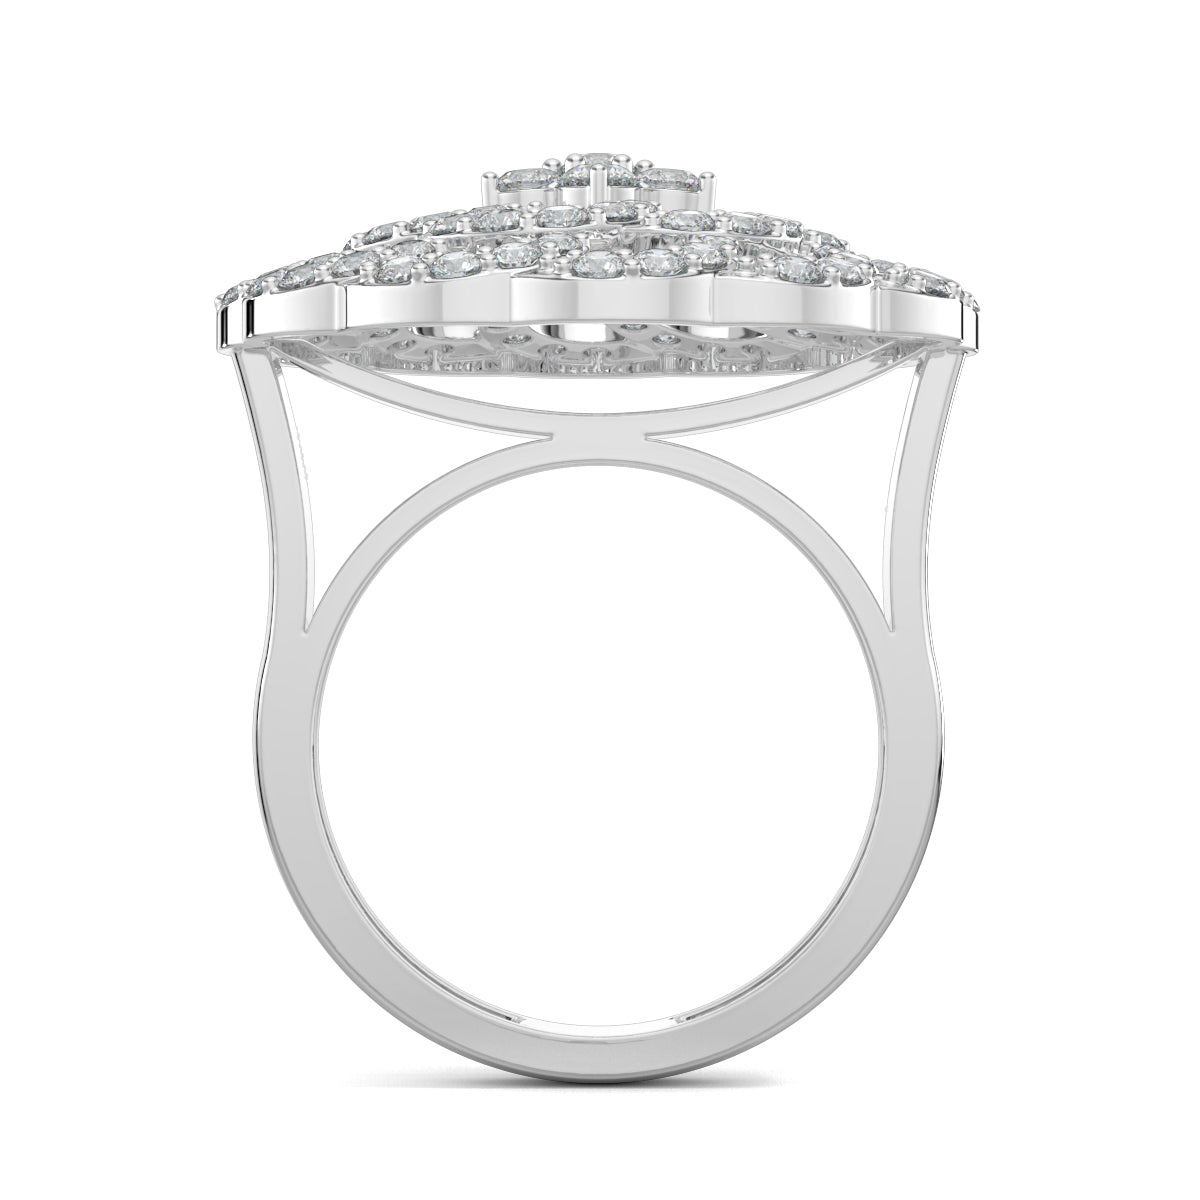 White Gold, Diamond Ring, Natural diamond ring, Blossom Burst Diamond Ring, Lab-Grown Diamonds, Floral Inspired Ring, Diamond Encrusted Ring, Cocktail Jewelry, Statement Ring, Elegant Band Ring, Sparkling Flower Ring